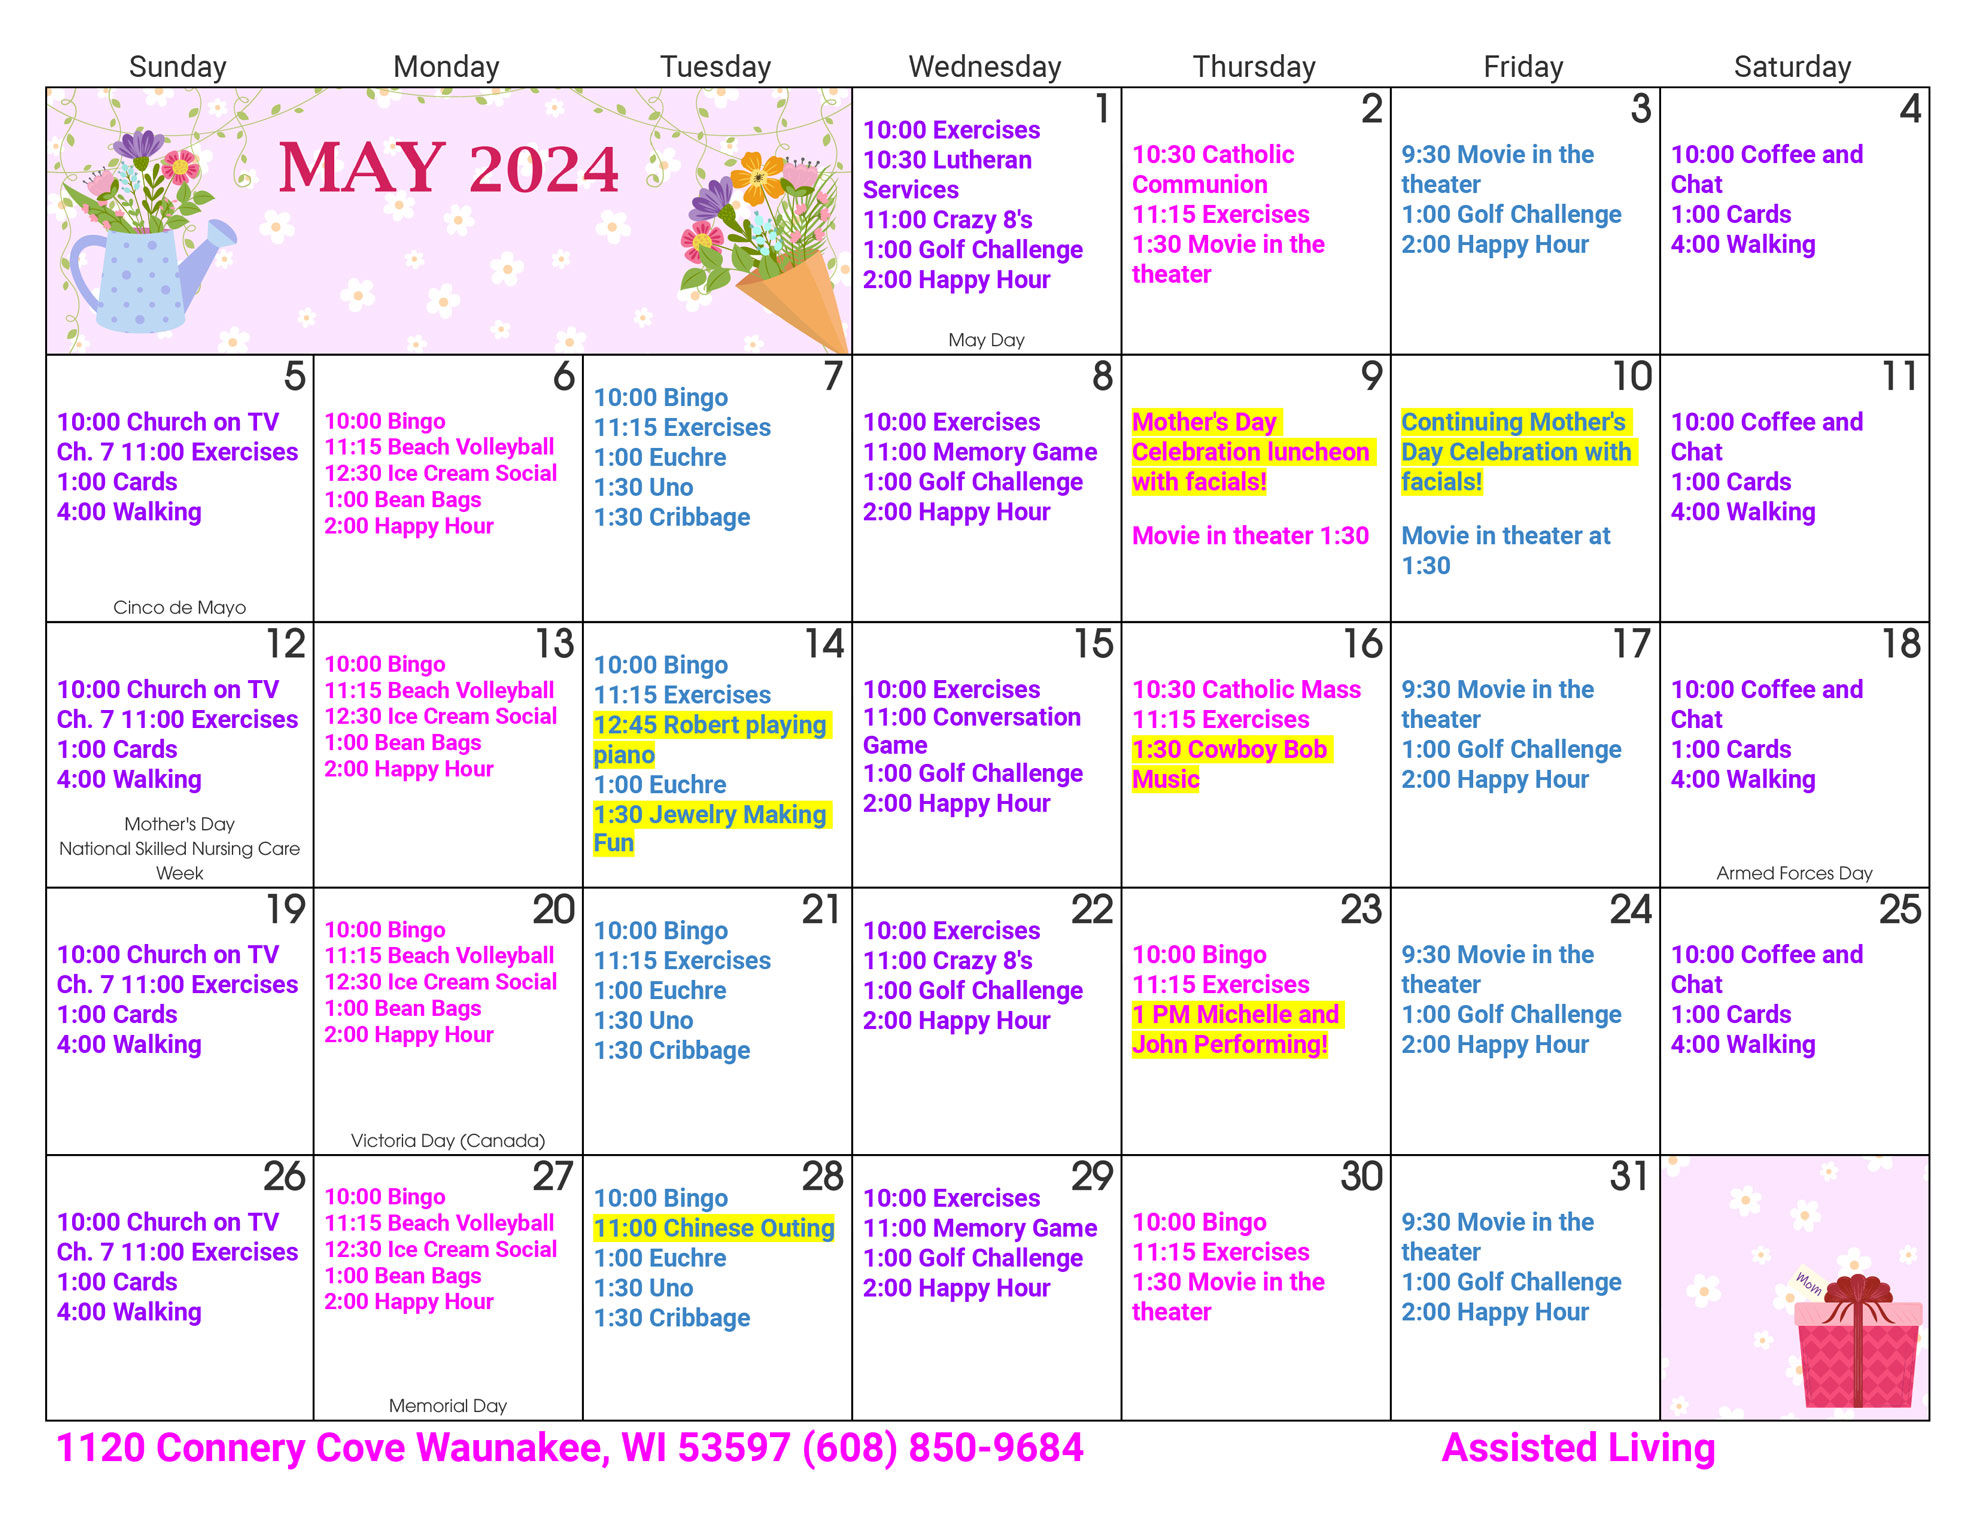 Waunakee Assisted Living May 2024 Activity Calendar